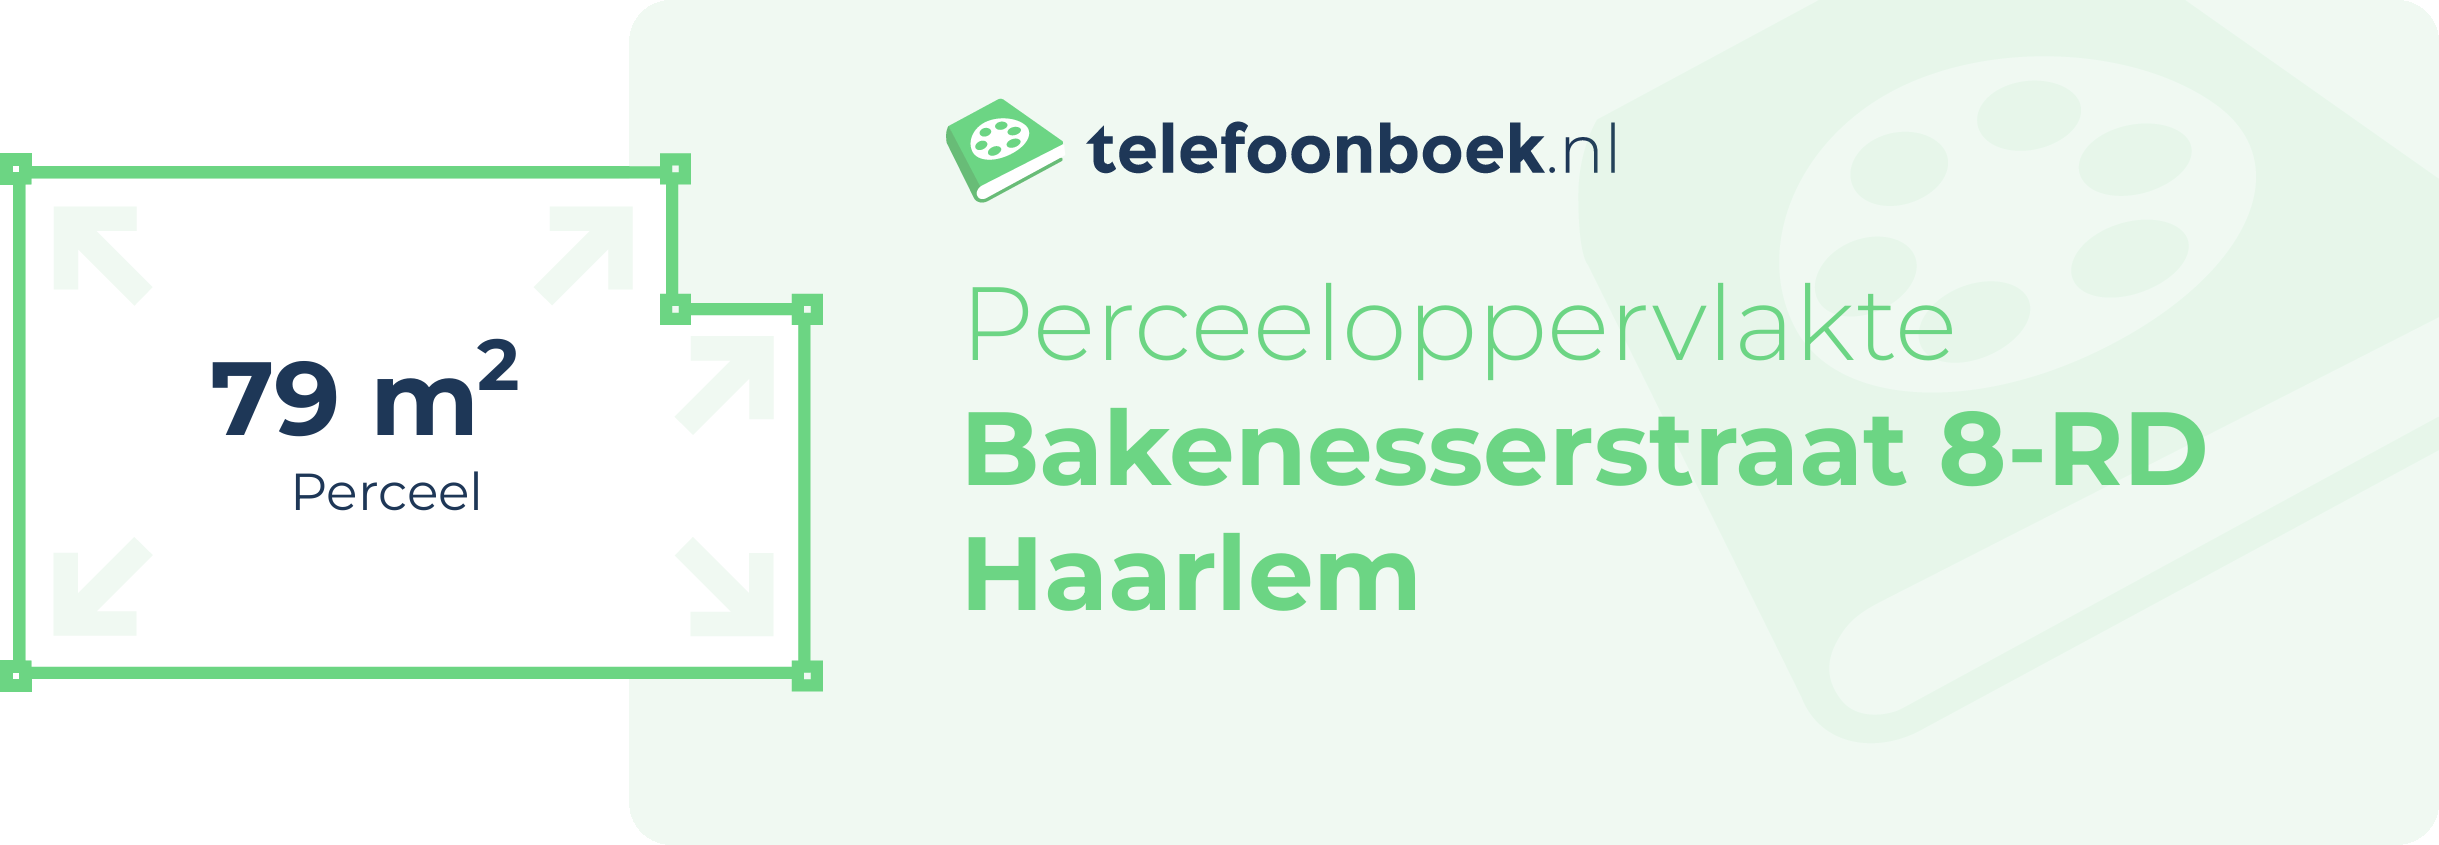 Perceeloppervlakte Bakenesserstraat 8-RD Haarlem